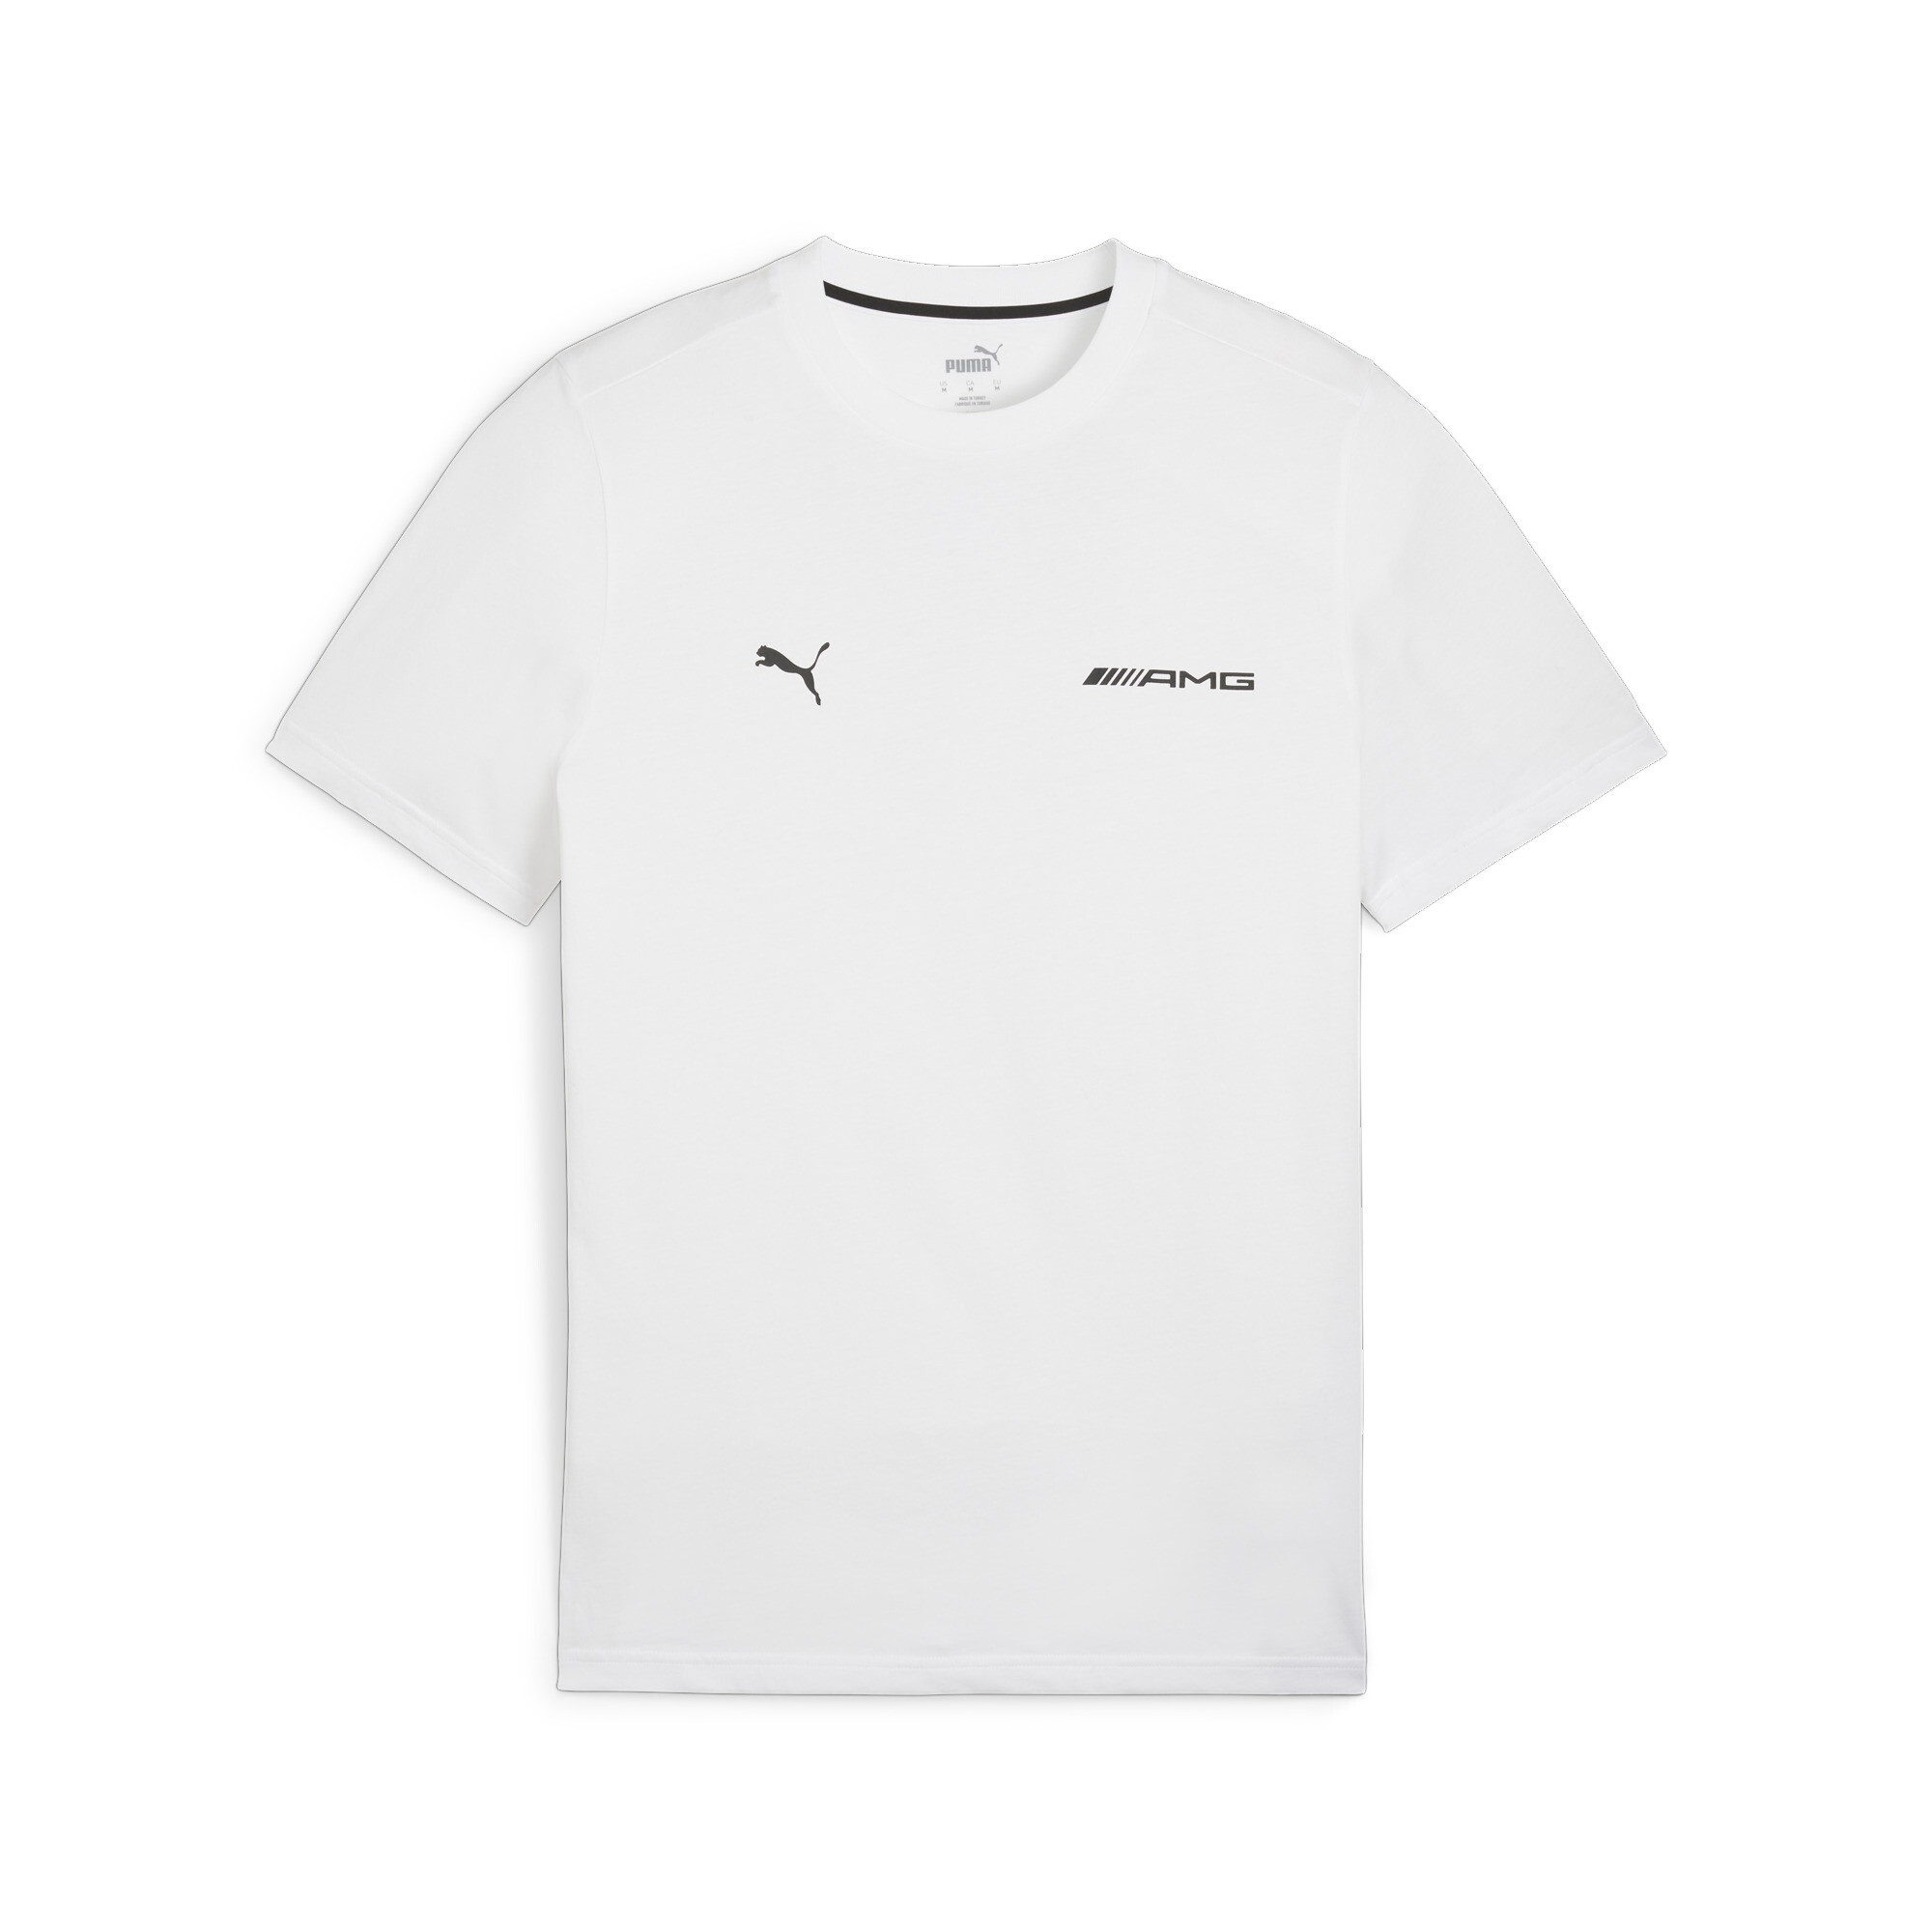 Men's Puma AMG Motorsports Graphic T-Shirt, White, Size M, Clothing